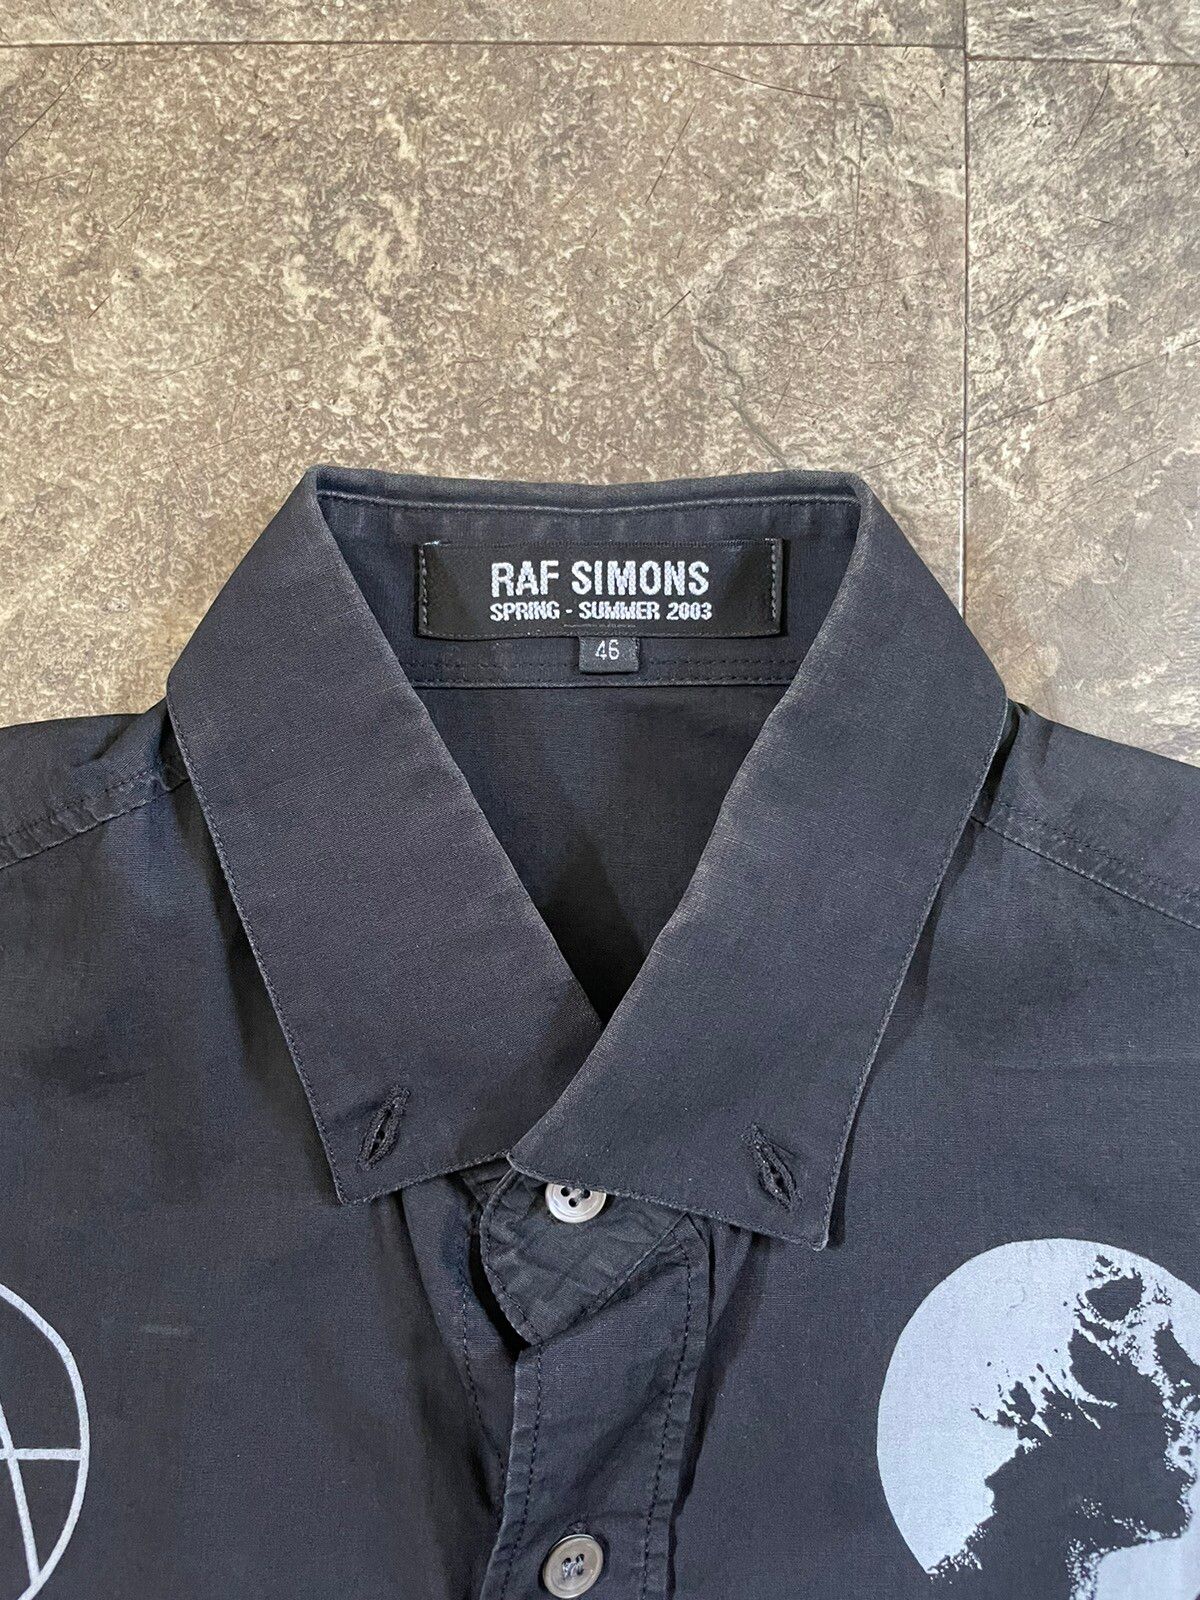 Raf Simons Raf Simons “Consumed” Button Up Shirt Size US S / EU 44-46 / 1 - 6 Thumbnail